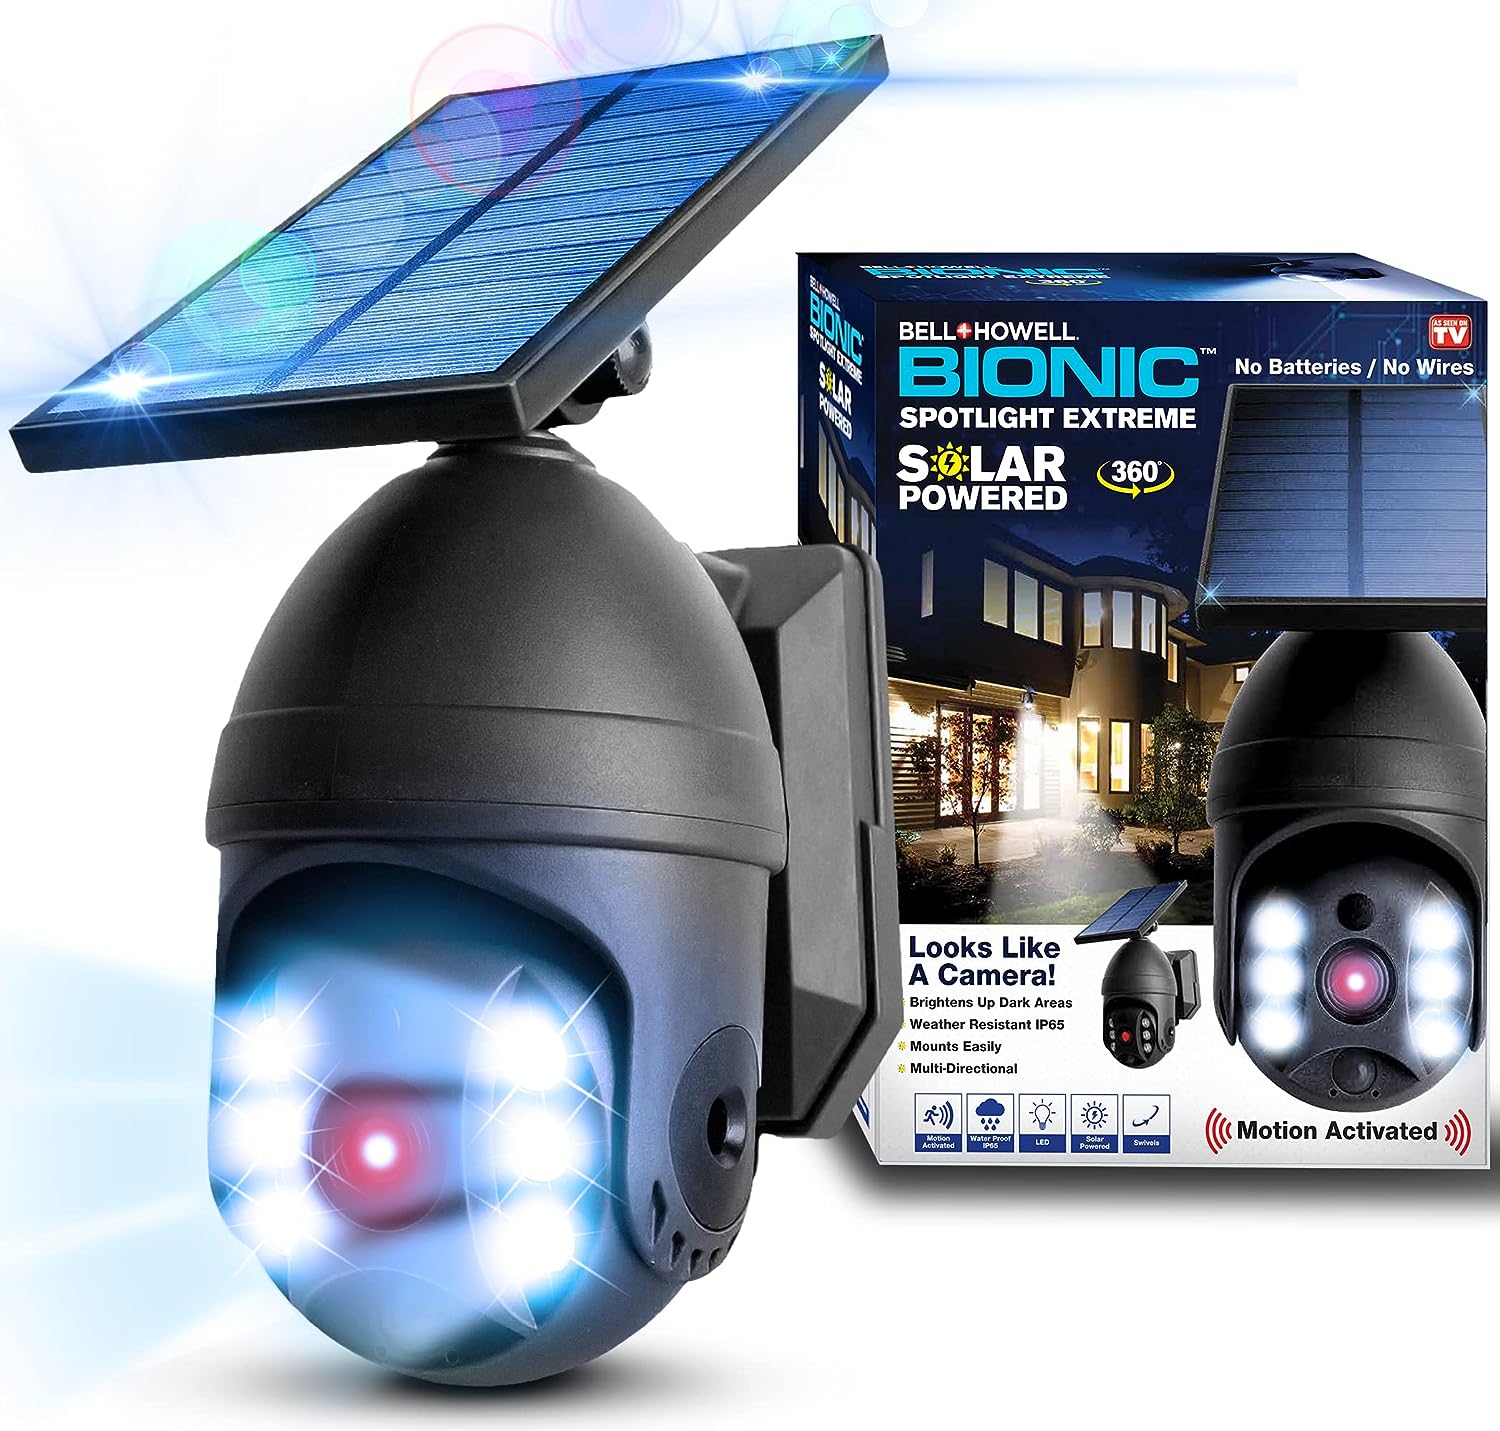 Bell + Howell Bionic Spotlight Extreme 360